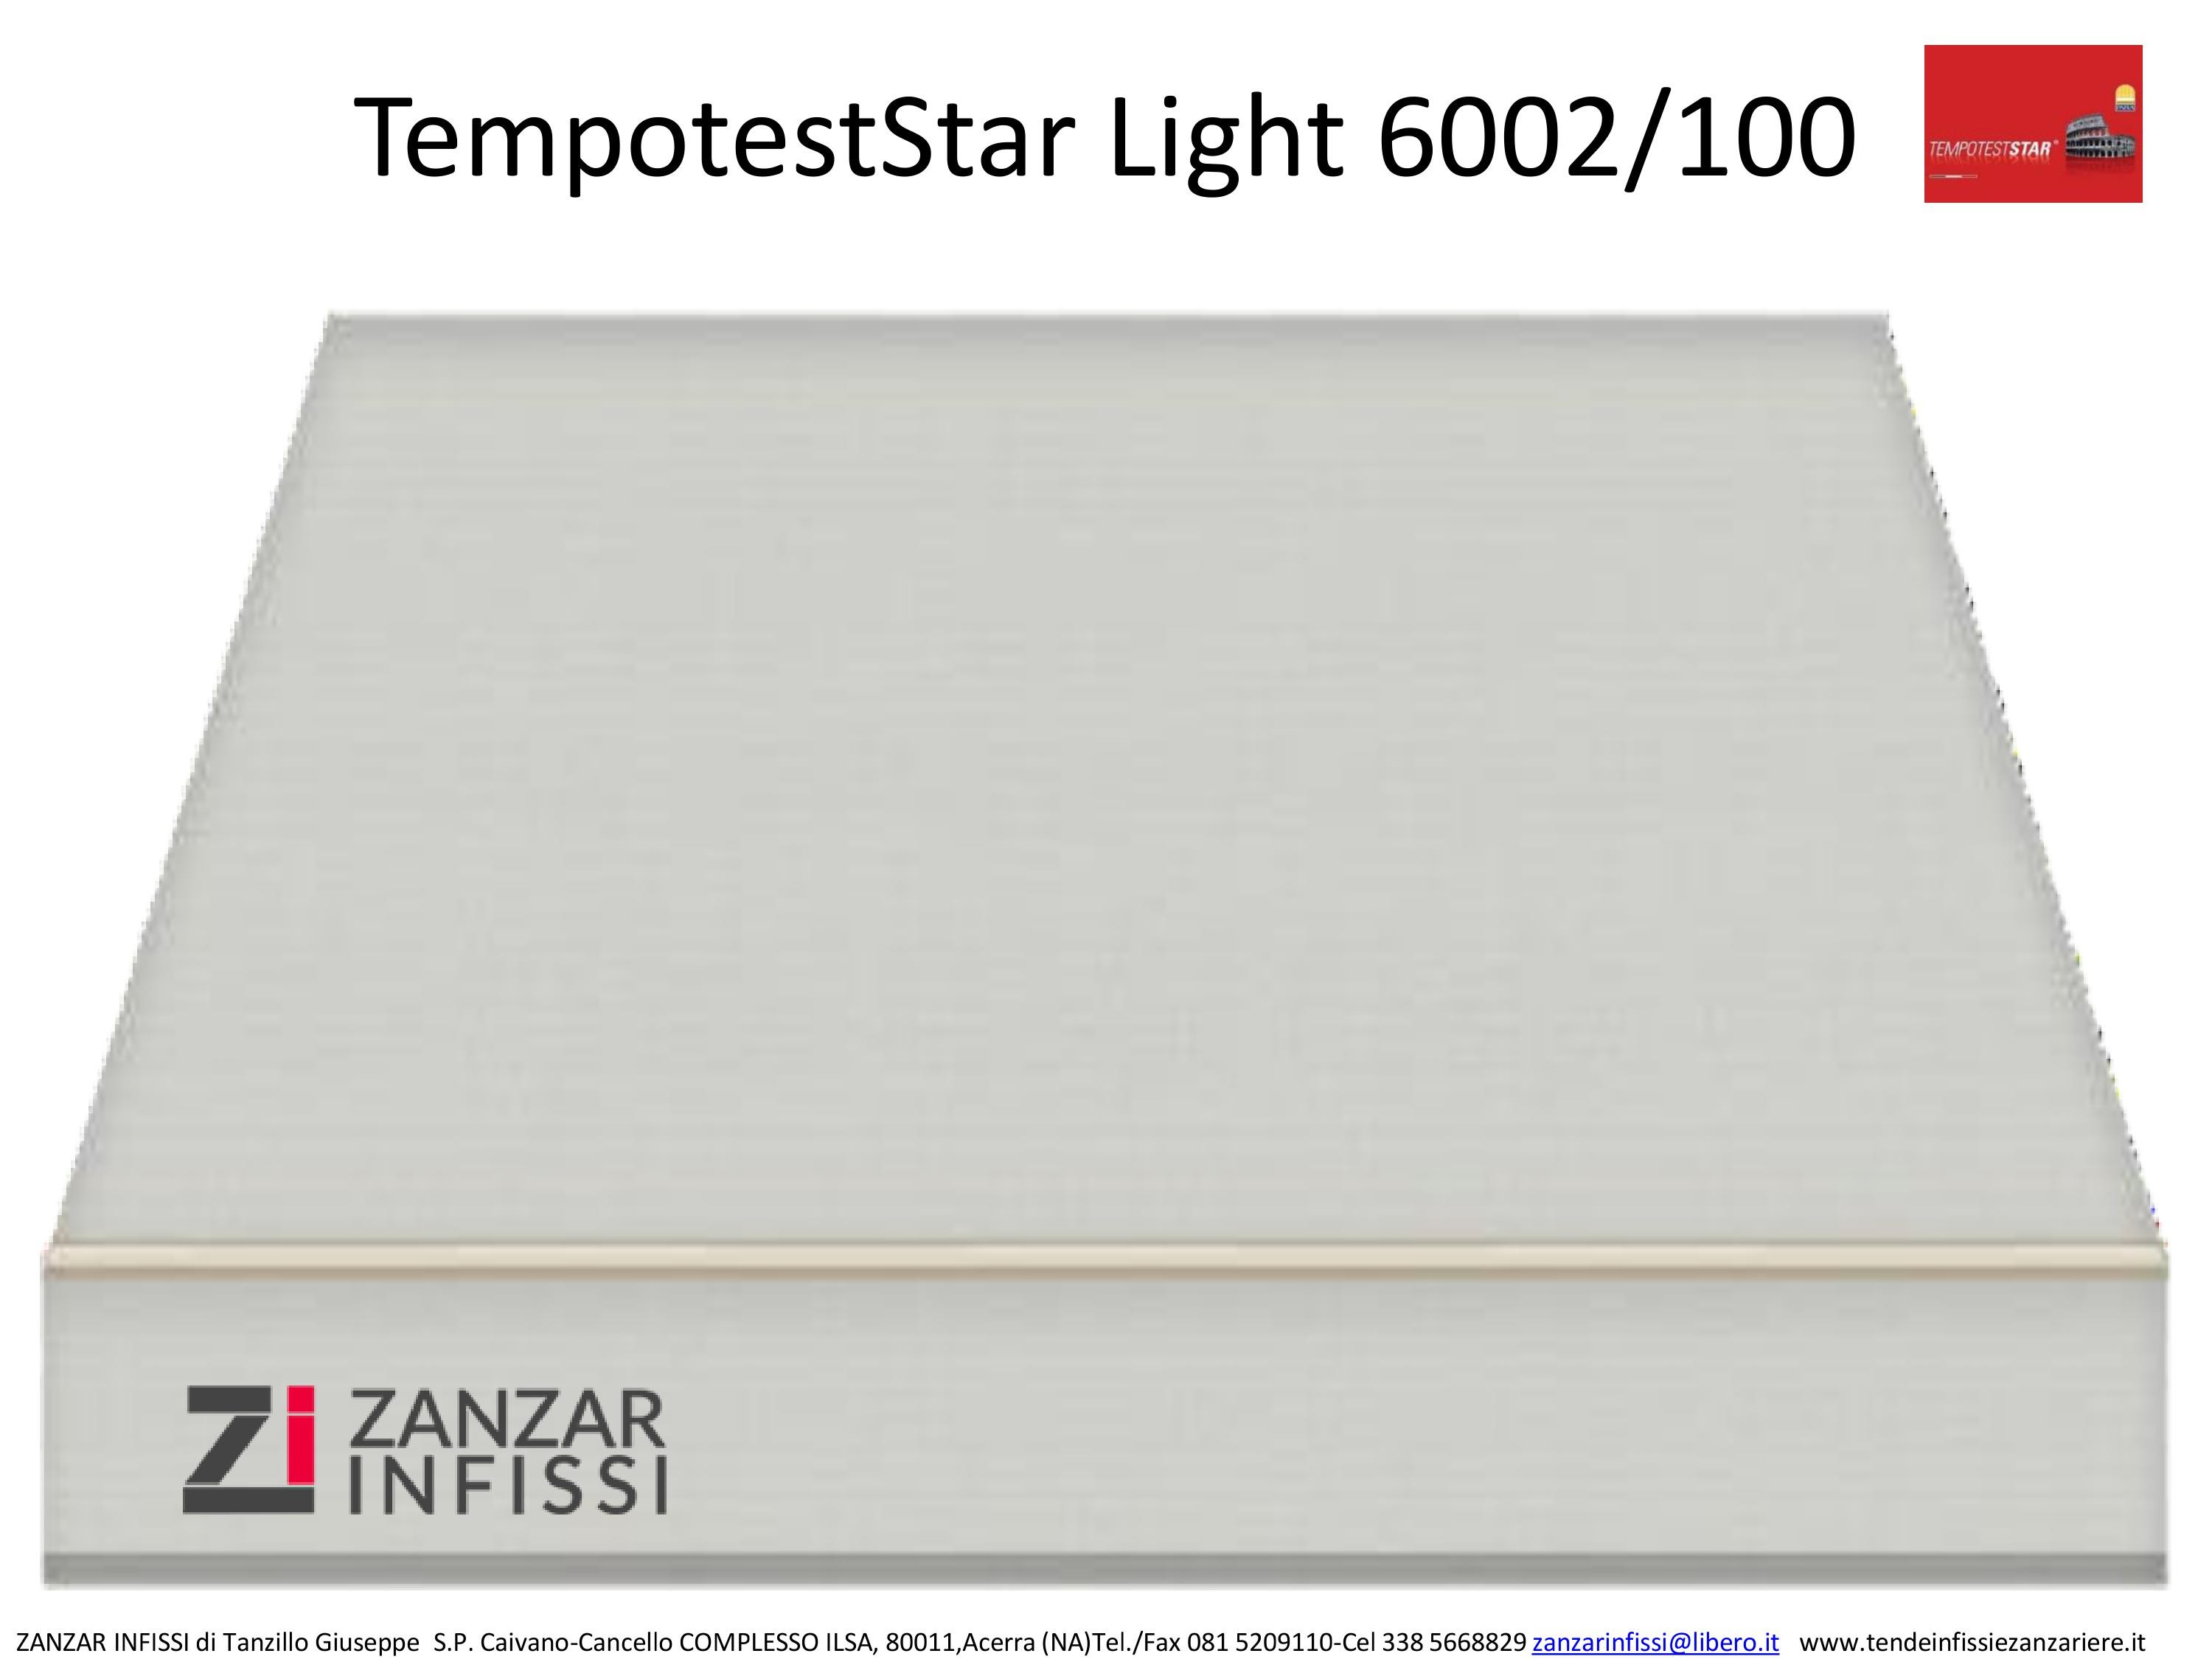 Tempotest star light 6002/100